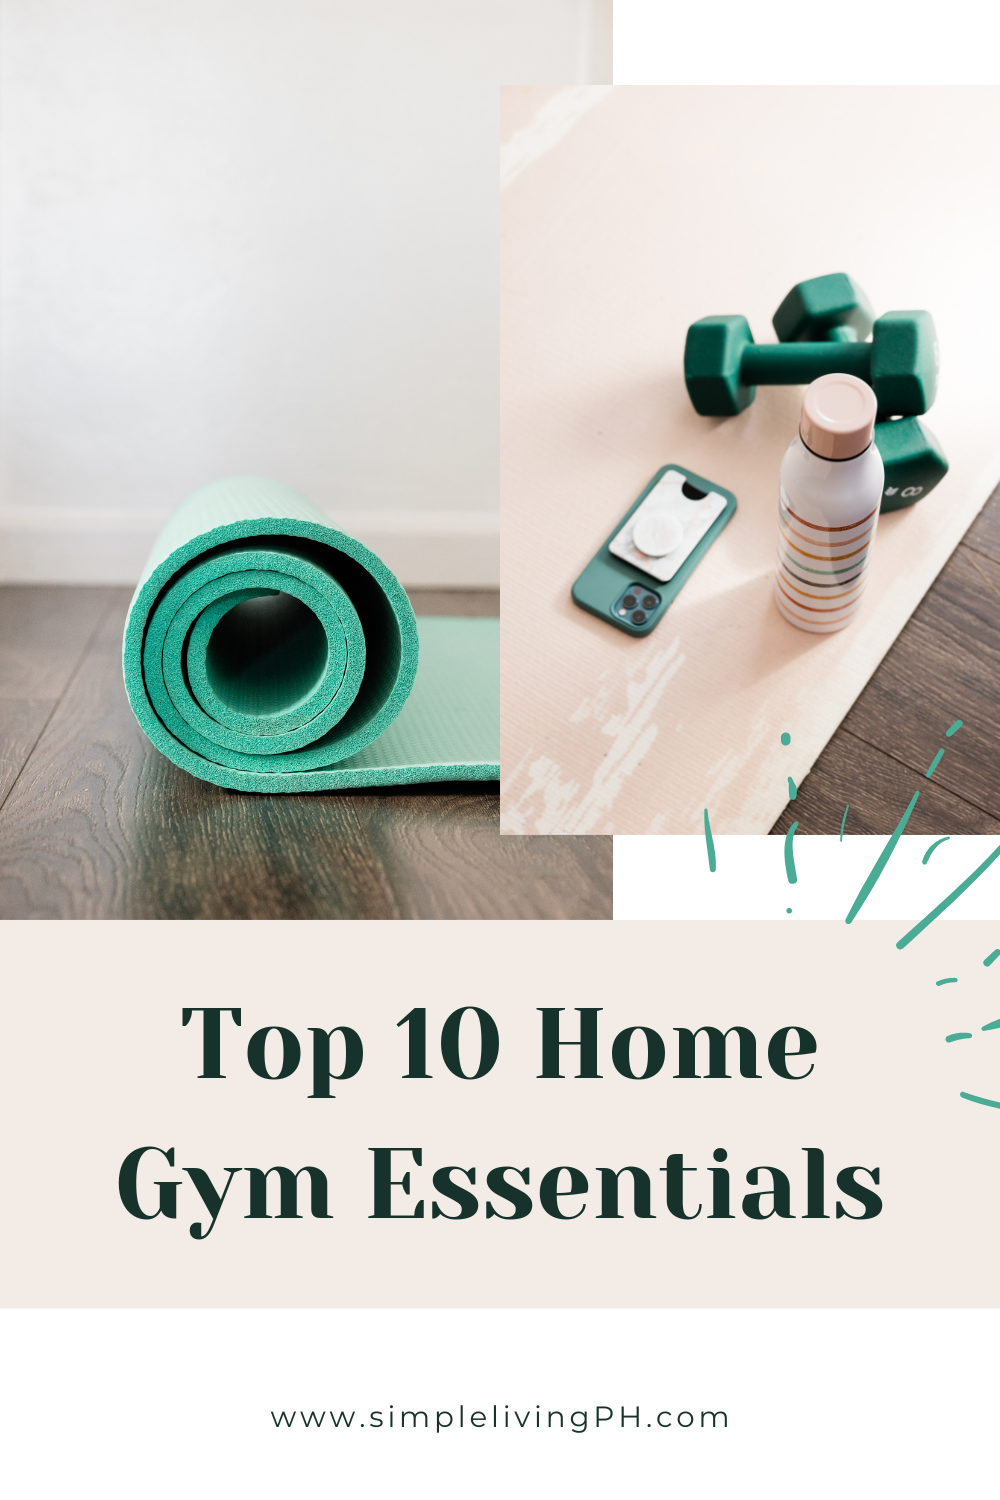 Top 10 Home Gym Essentials - Simple Living PH